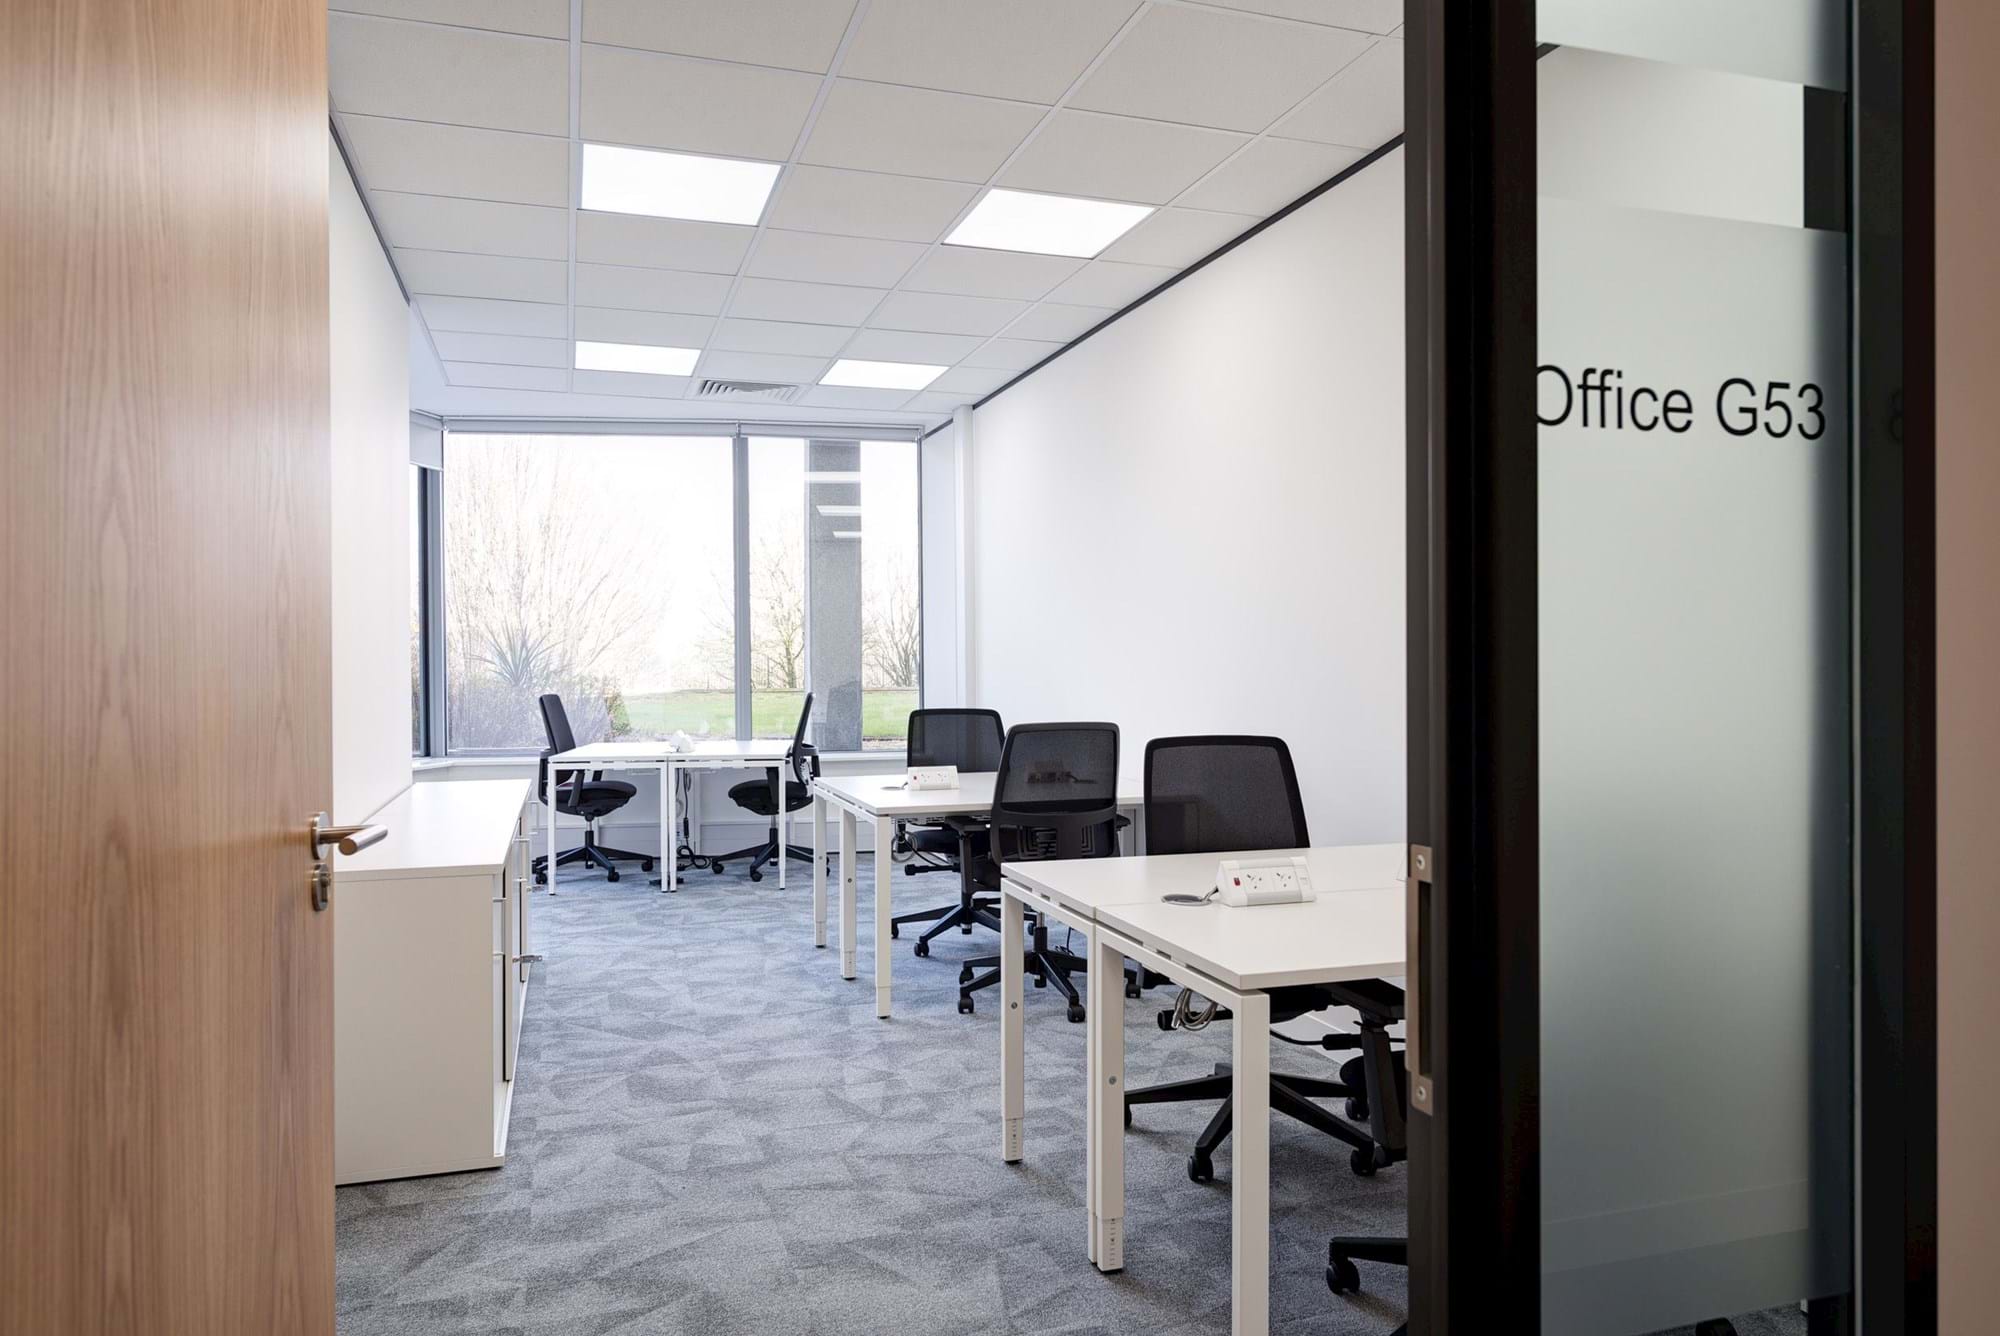 Modus Workspace office design, fit out and refurbishment - Regus Ashford - Regus Ashford 15 highres sRGB.jpg